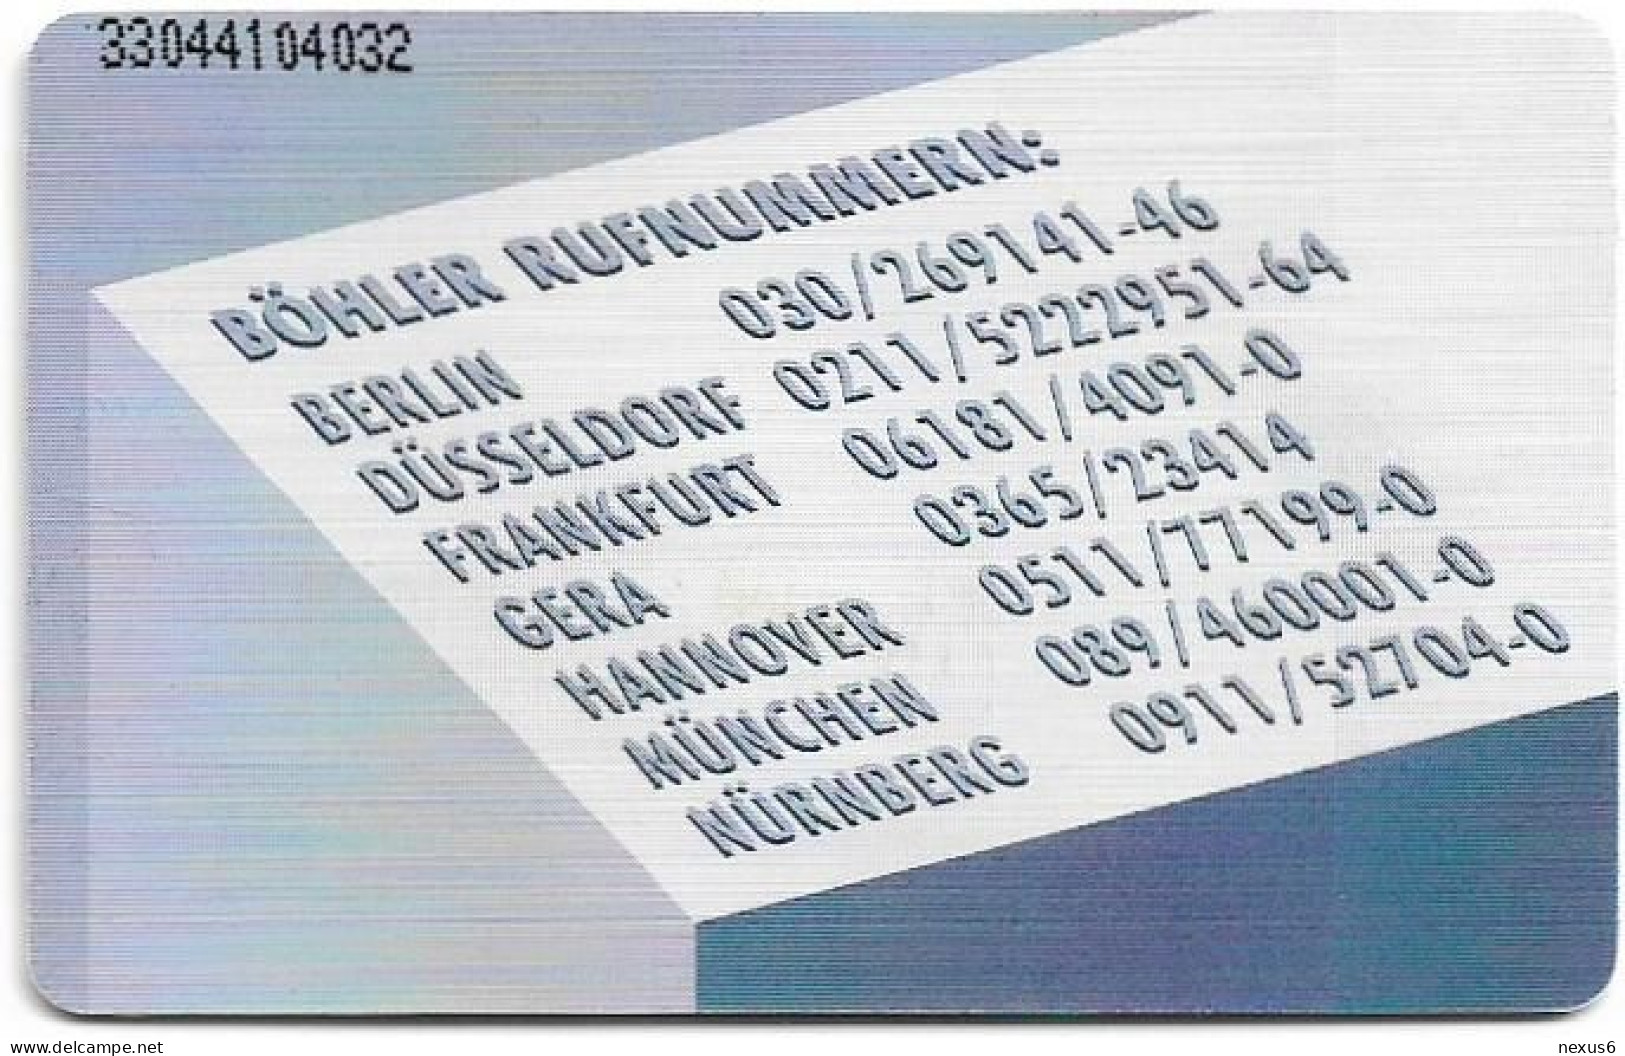 Germany - Böhler Edelstahl - O 0853 - 04.1993, 12DM, 2.000ex, Used - O-Series: Kundenserie Vom Sammlerservice Ausgeschlossen